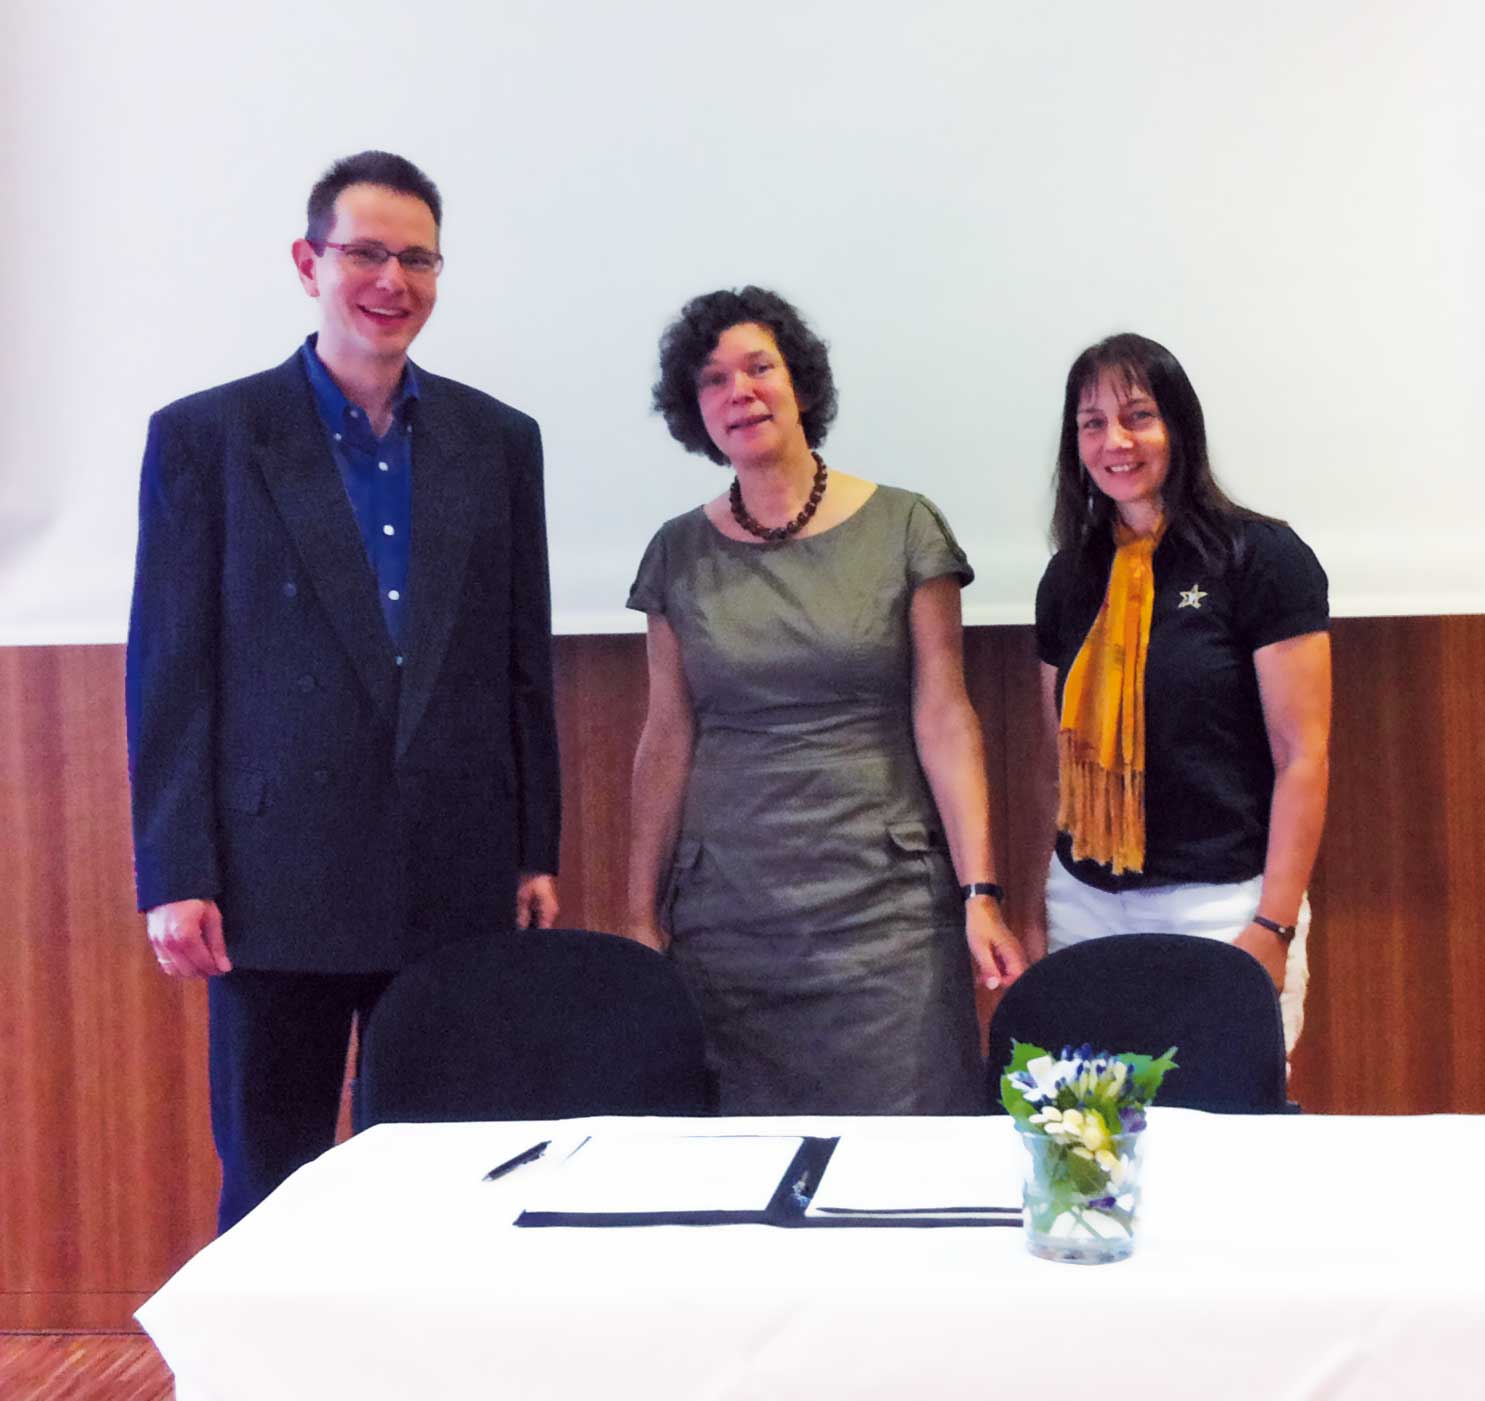 Symposium and New Grants bolster Vanderbilt-Leipzig Partnership